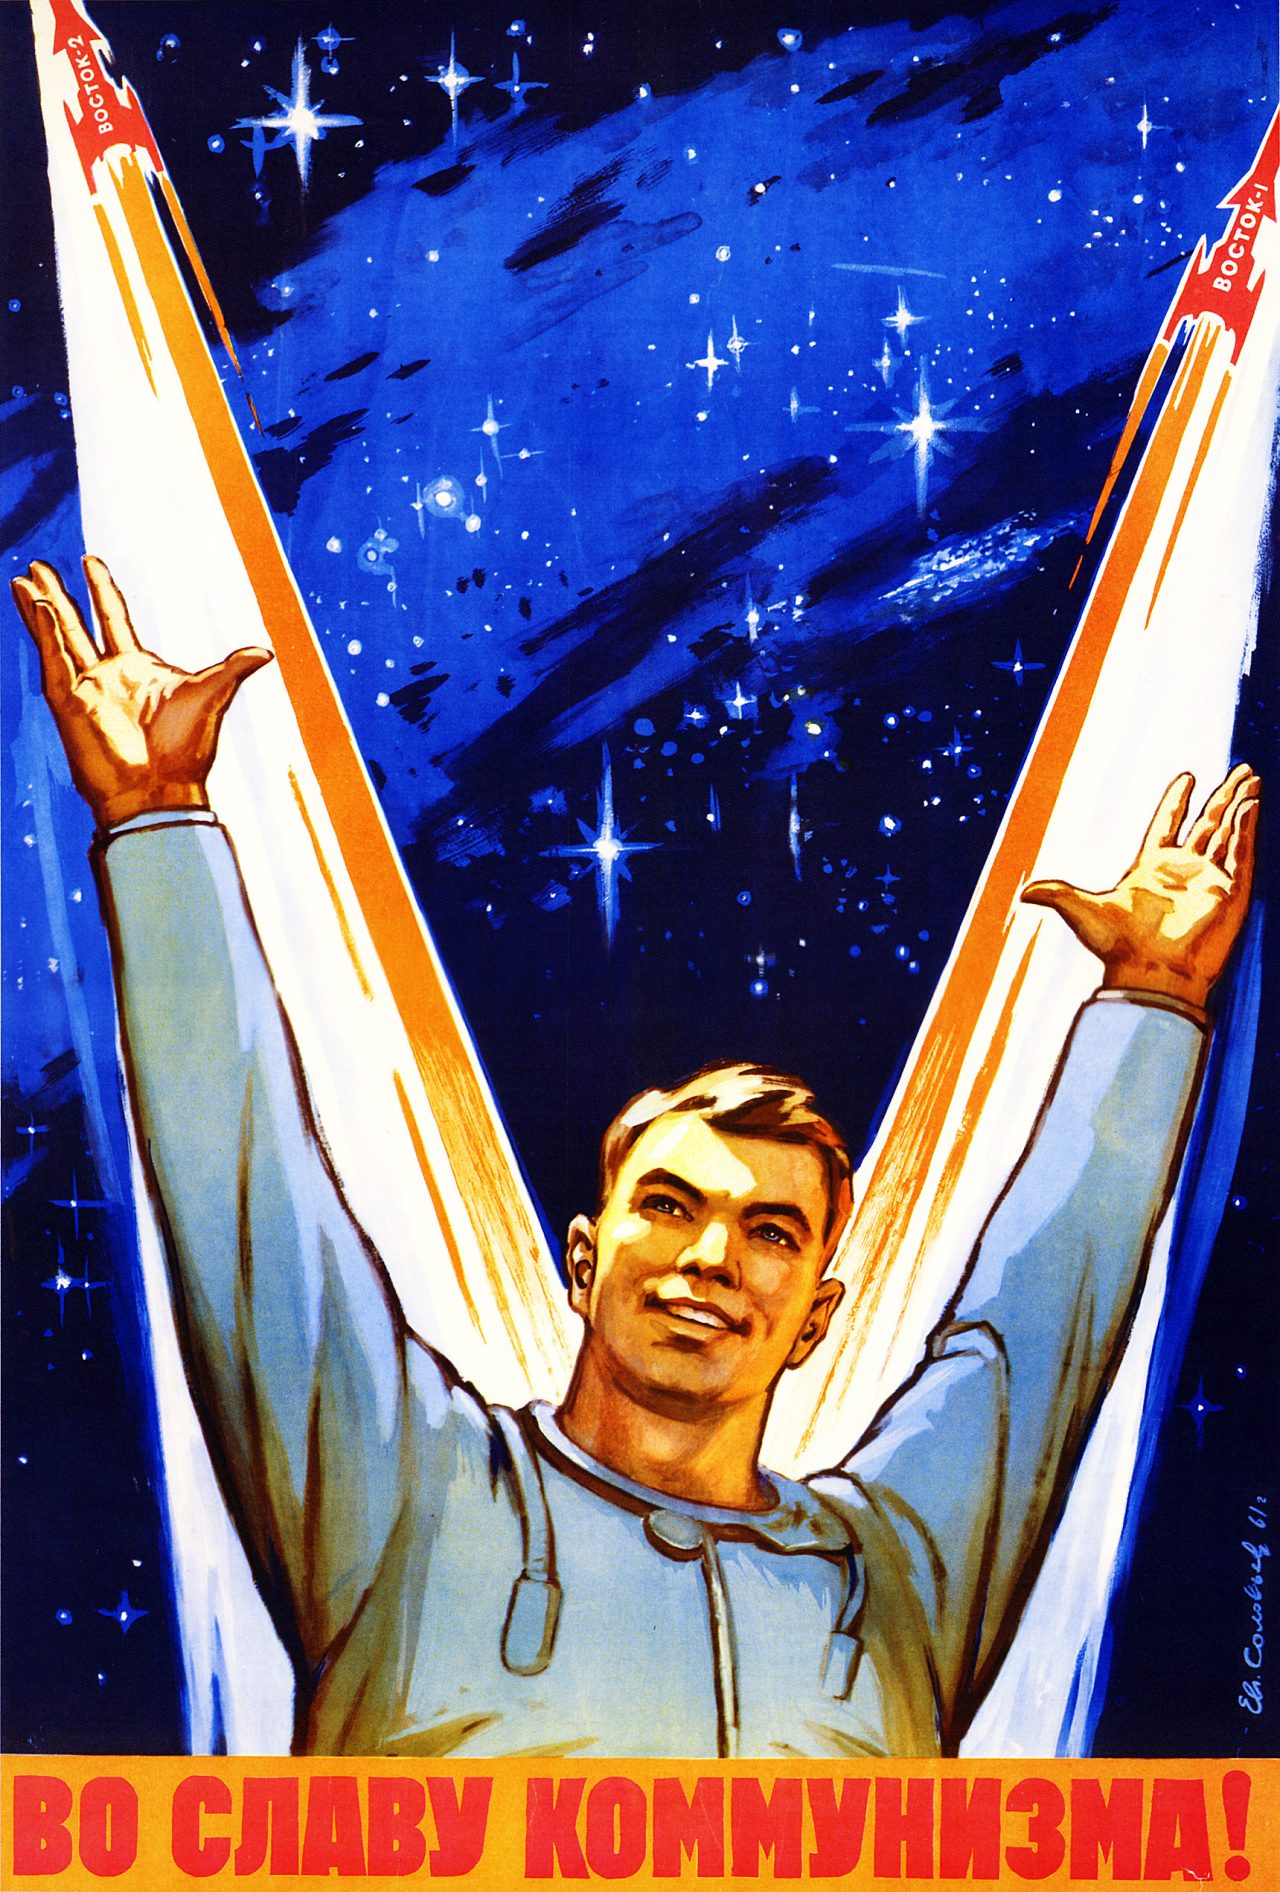 Soviet space. Советские плакаты. Советские плакаты про космос. Советские лозунги о космосе. Советские плакаты посвящённые космонавтике.